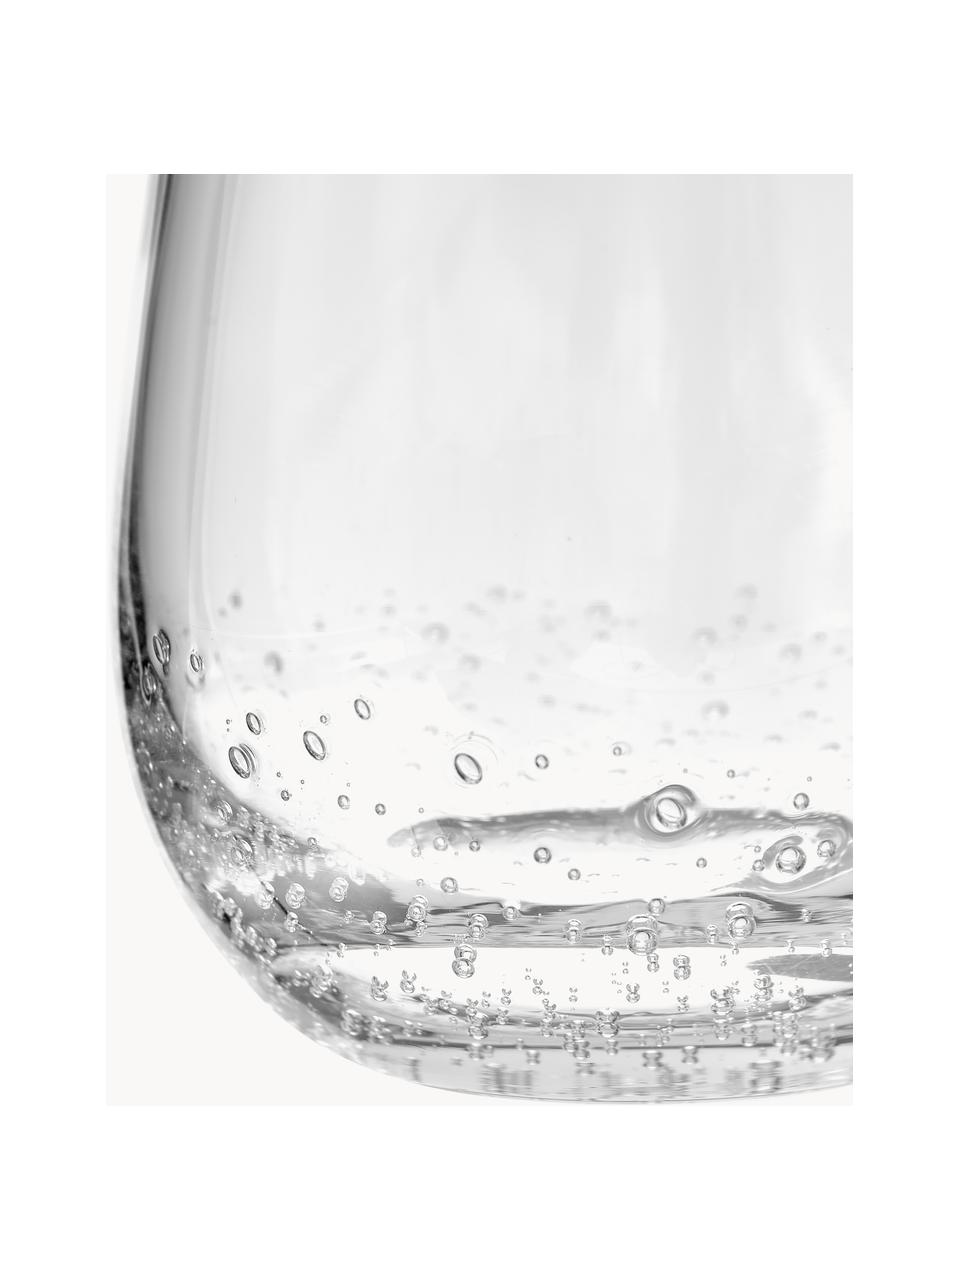 Mondgeblazen Bubble waterglazen met decoratieve luchtbellen, 4 stuks, Mondgeblazen glas, Transparant, Ø 9 x H 10 cm, 250 ml